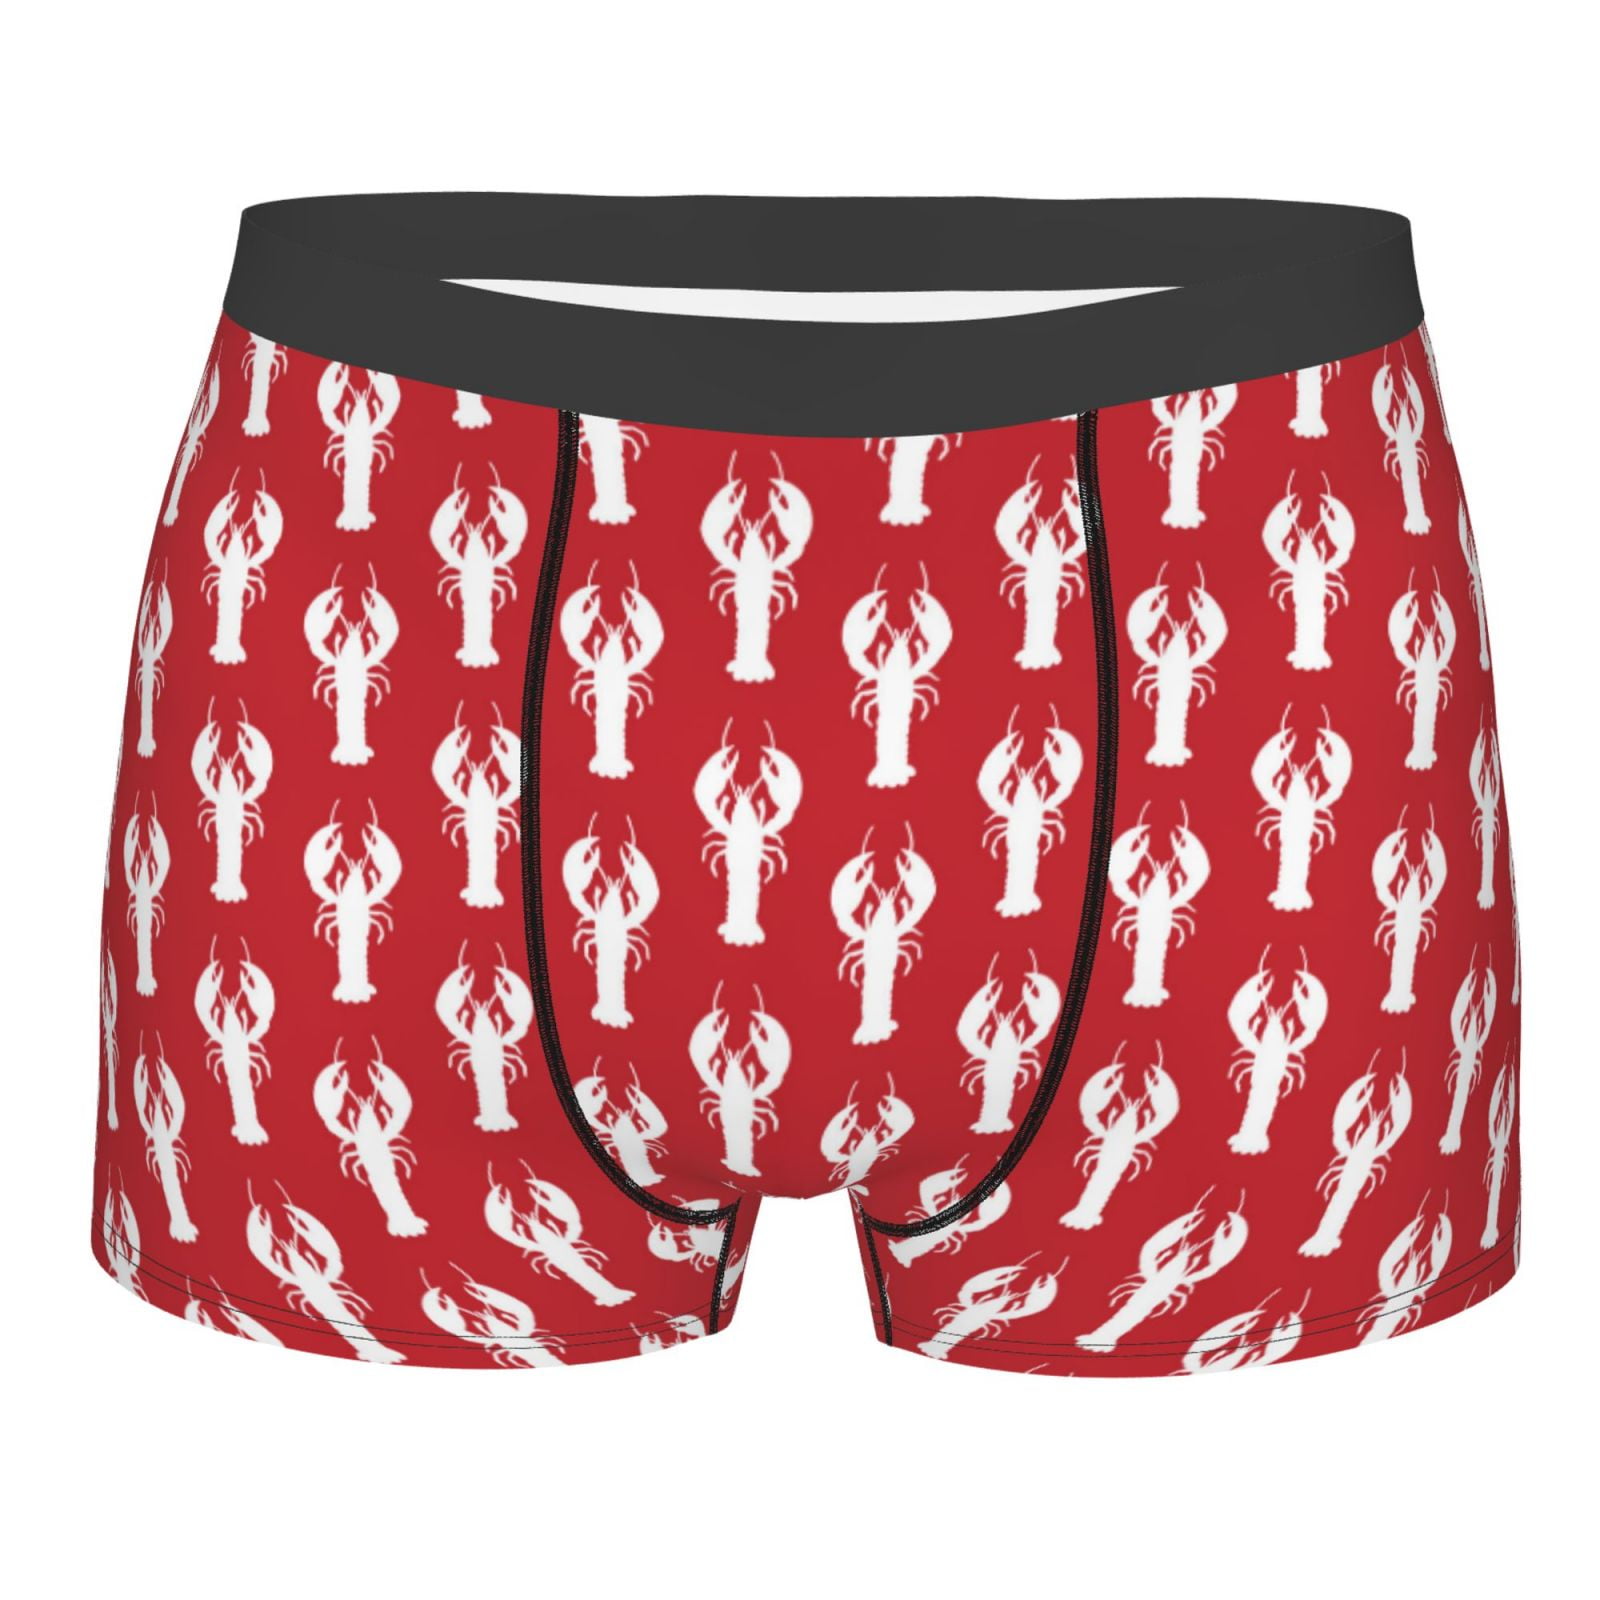 Kll Cartoon Lobster Men'S Cotton Boxer Briefs Underwear-Small - Walmart.com